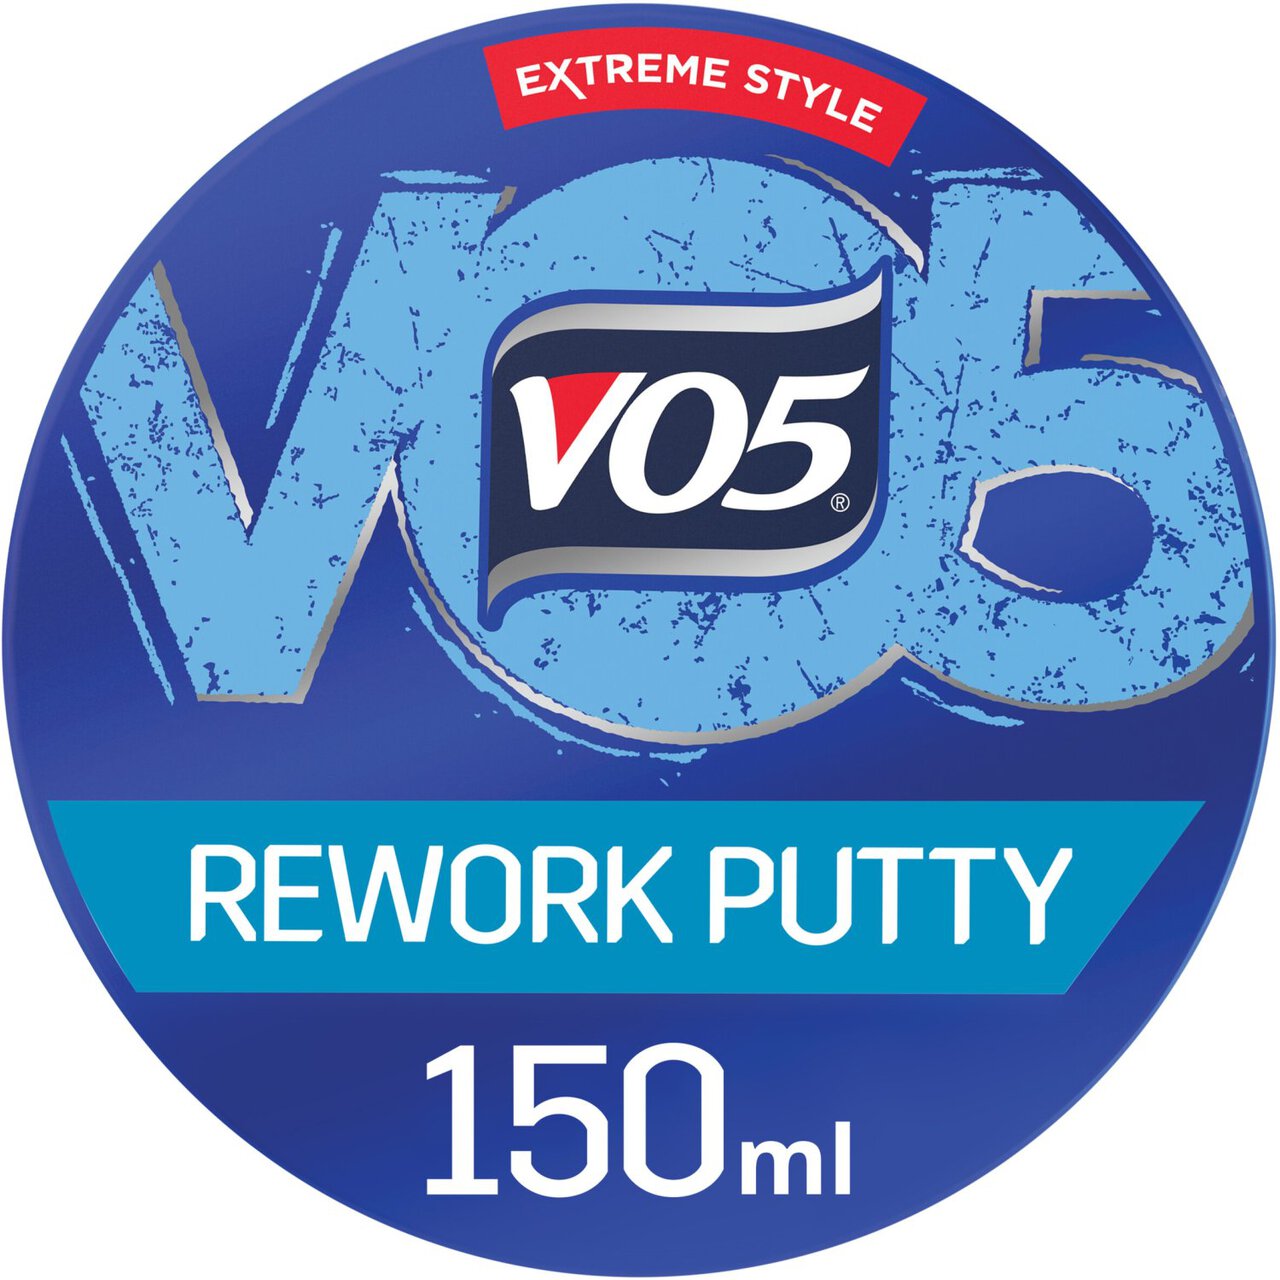 VO5 Extreme Style Rework Putty 150ml